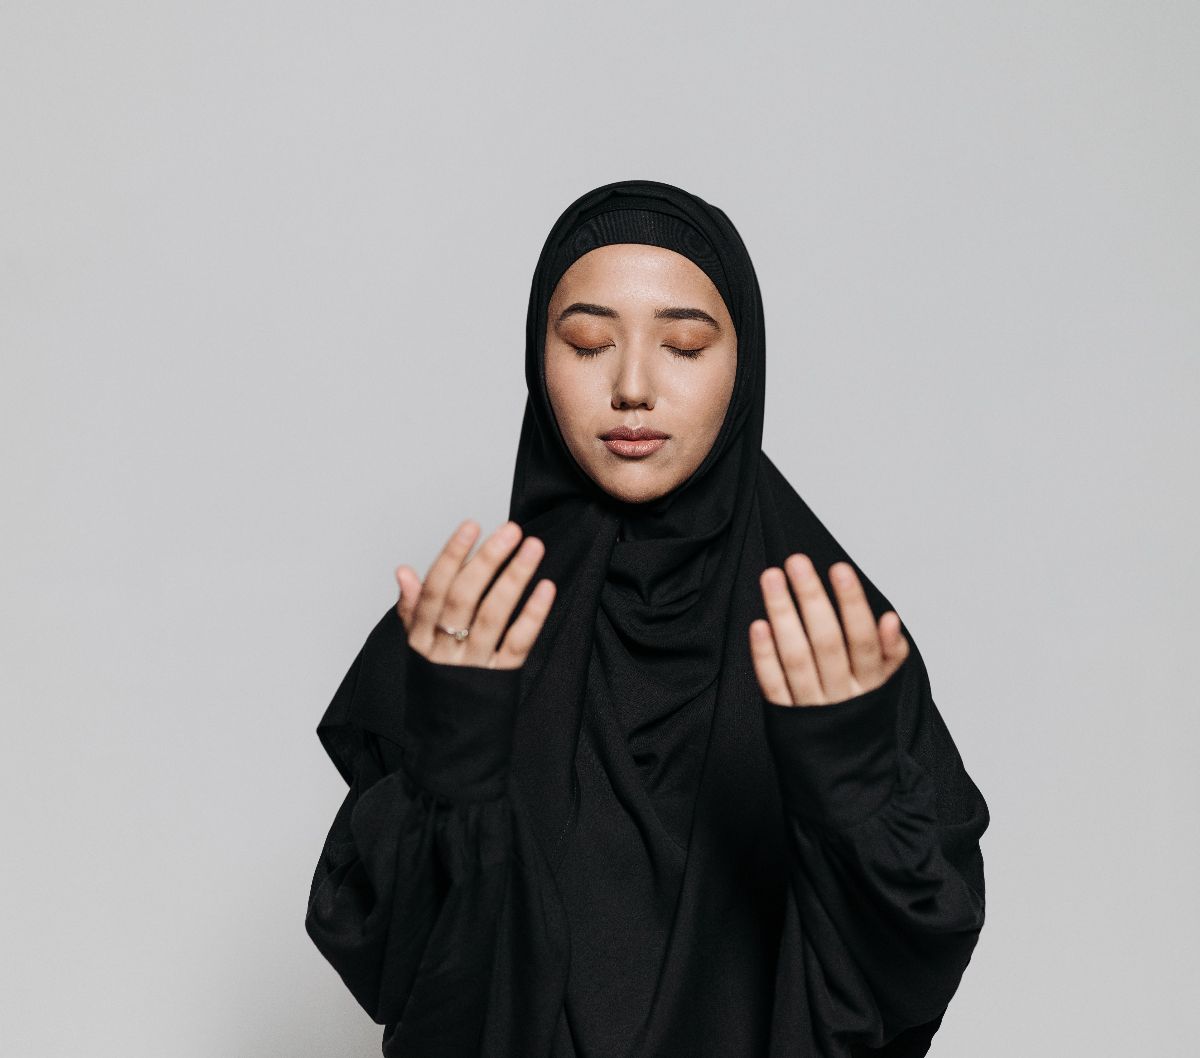 Doa Arwah dalam Bahasa Arab dan Artinya, Amalan untuk Orang yang Sudah Meninggal